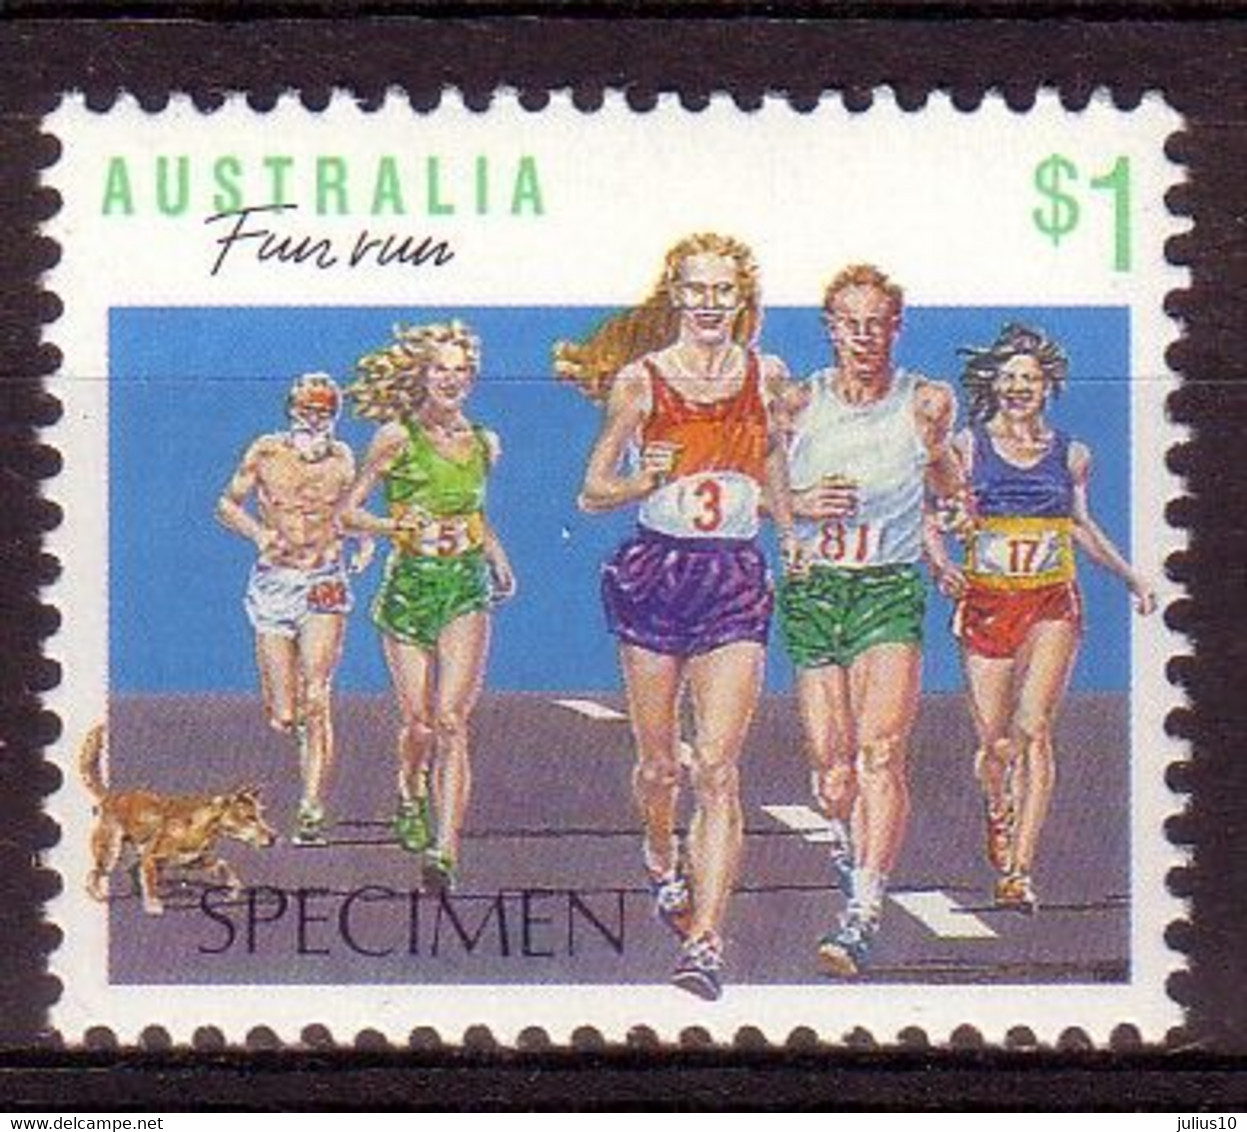 AUSTRALIA 1990 Sport Run „SPECIMEN“ High Value MNH Mi 1186 #10002 - Variétés Et Curiosités